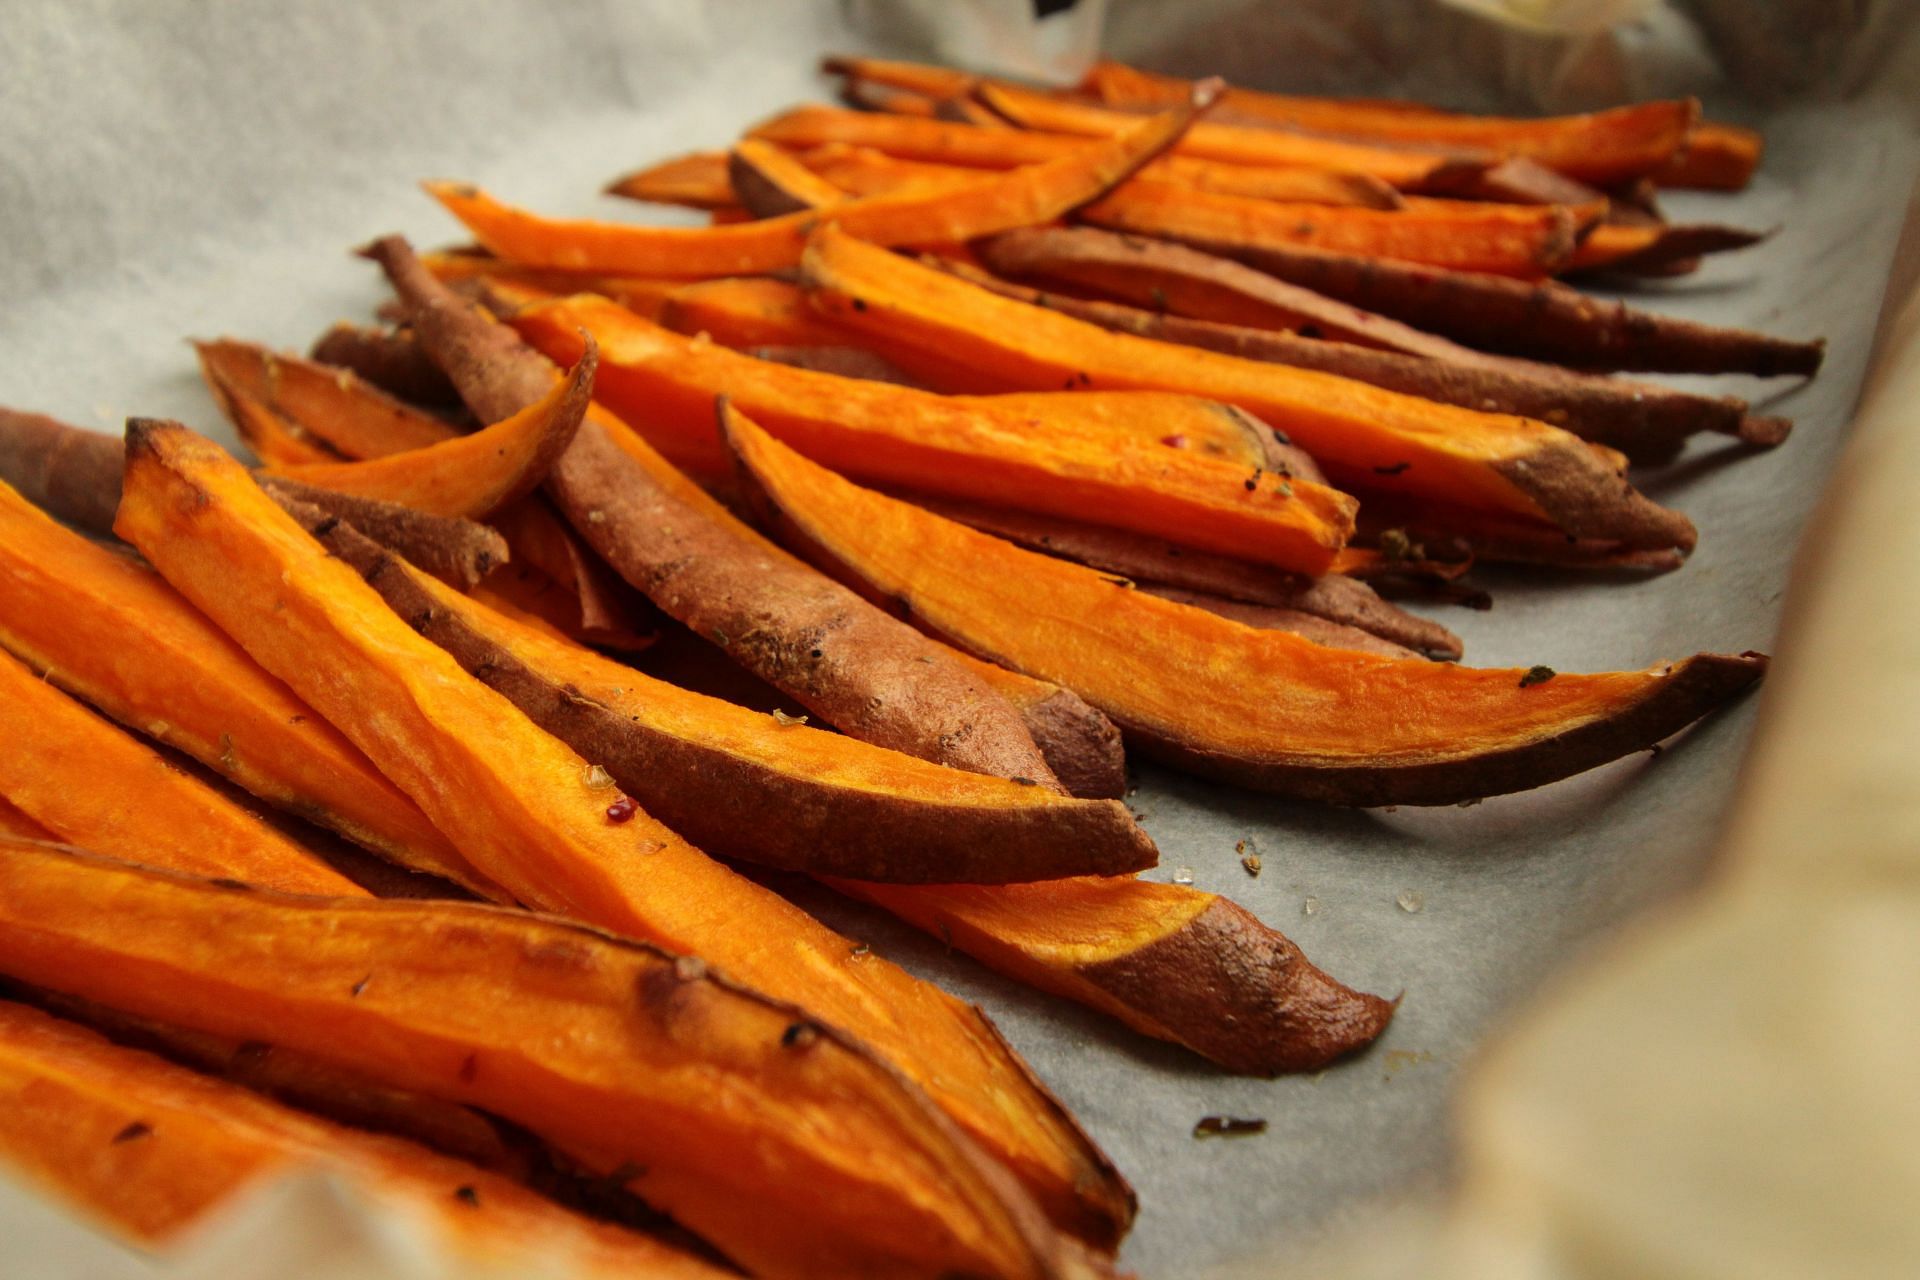 Fried Sweet Potatoes are Tasty (Image via Unsplash/Louis Hansel)